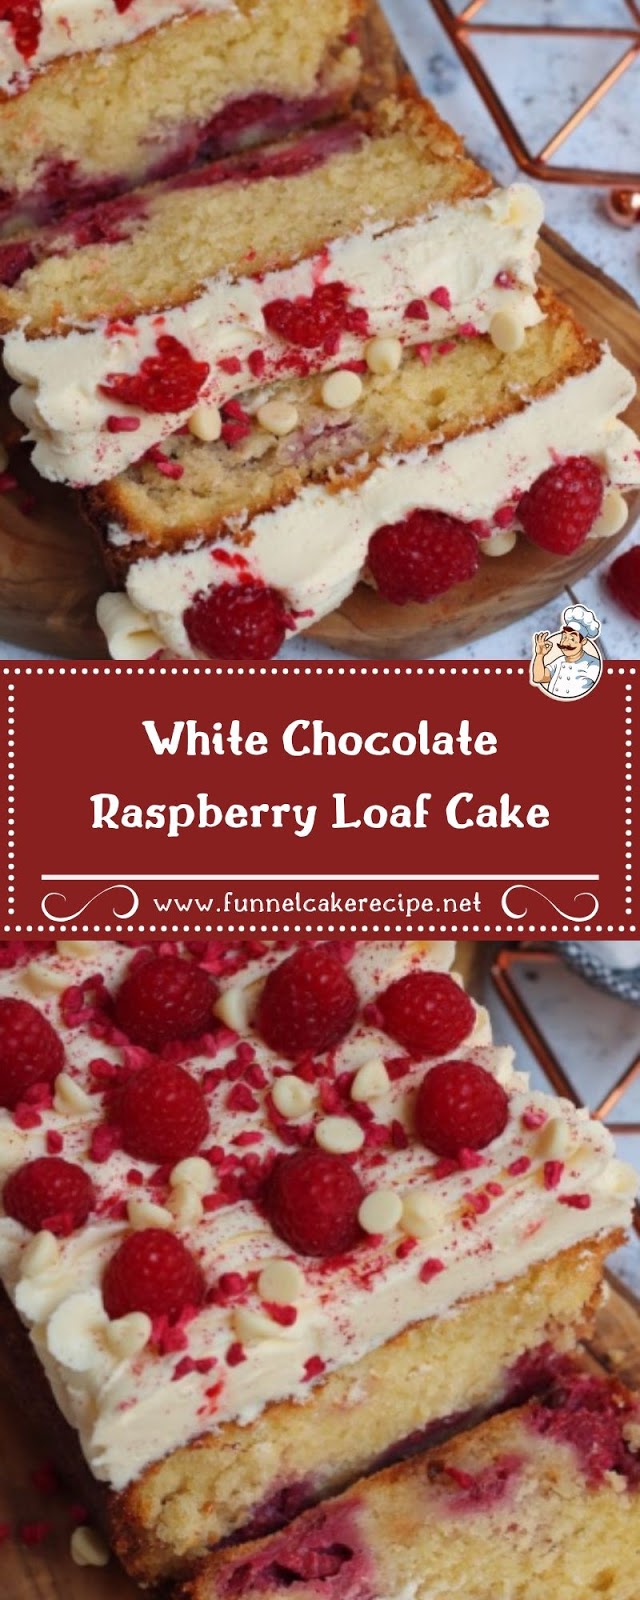 White Chocolate Raspberry Loaf Cake